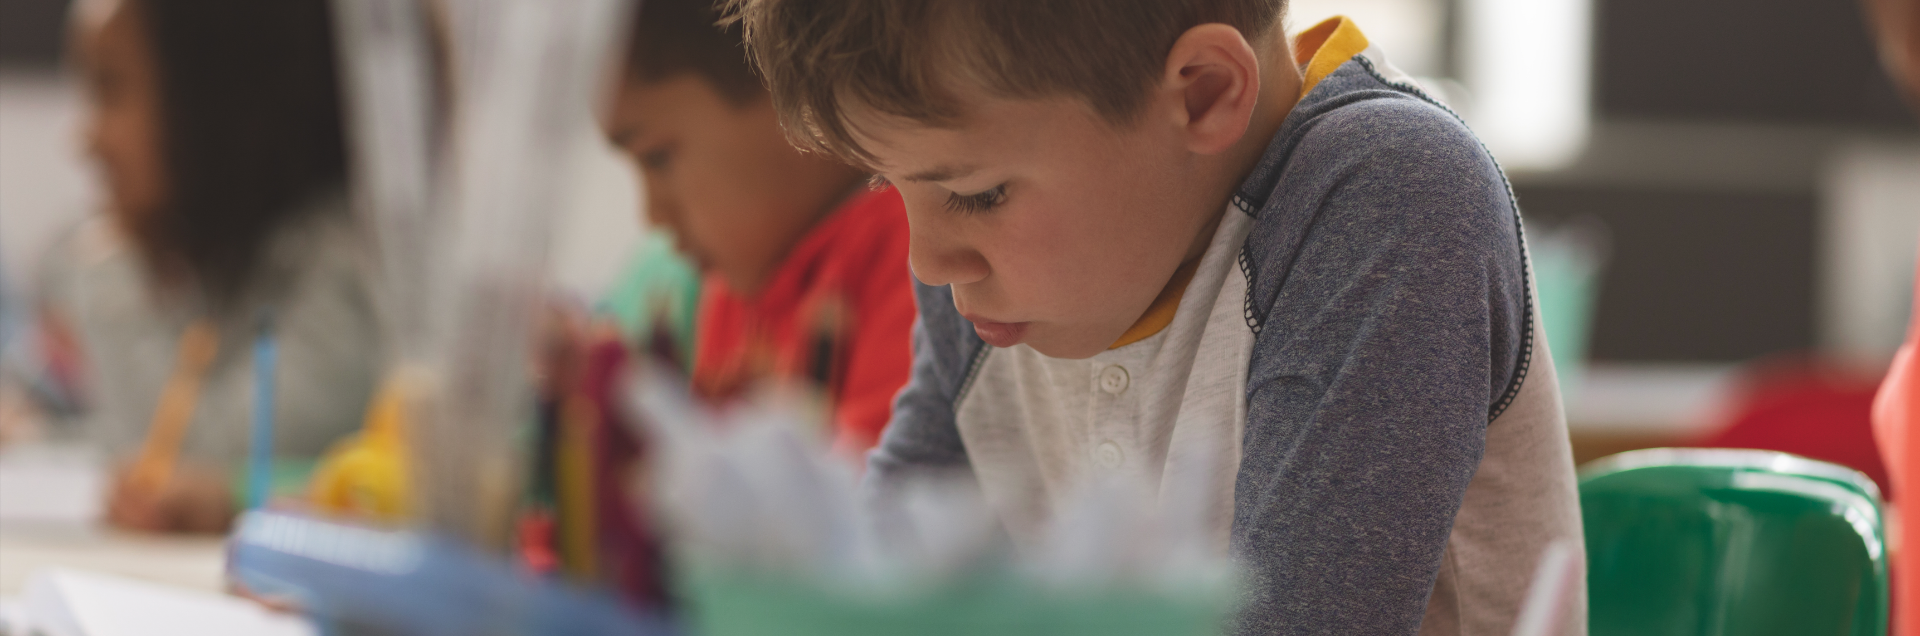 La influencia del método Montessori en la escuela pública